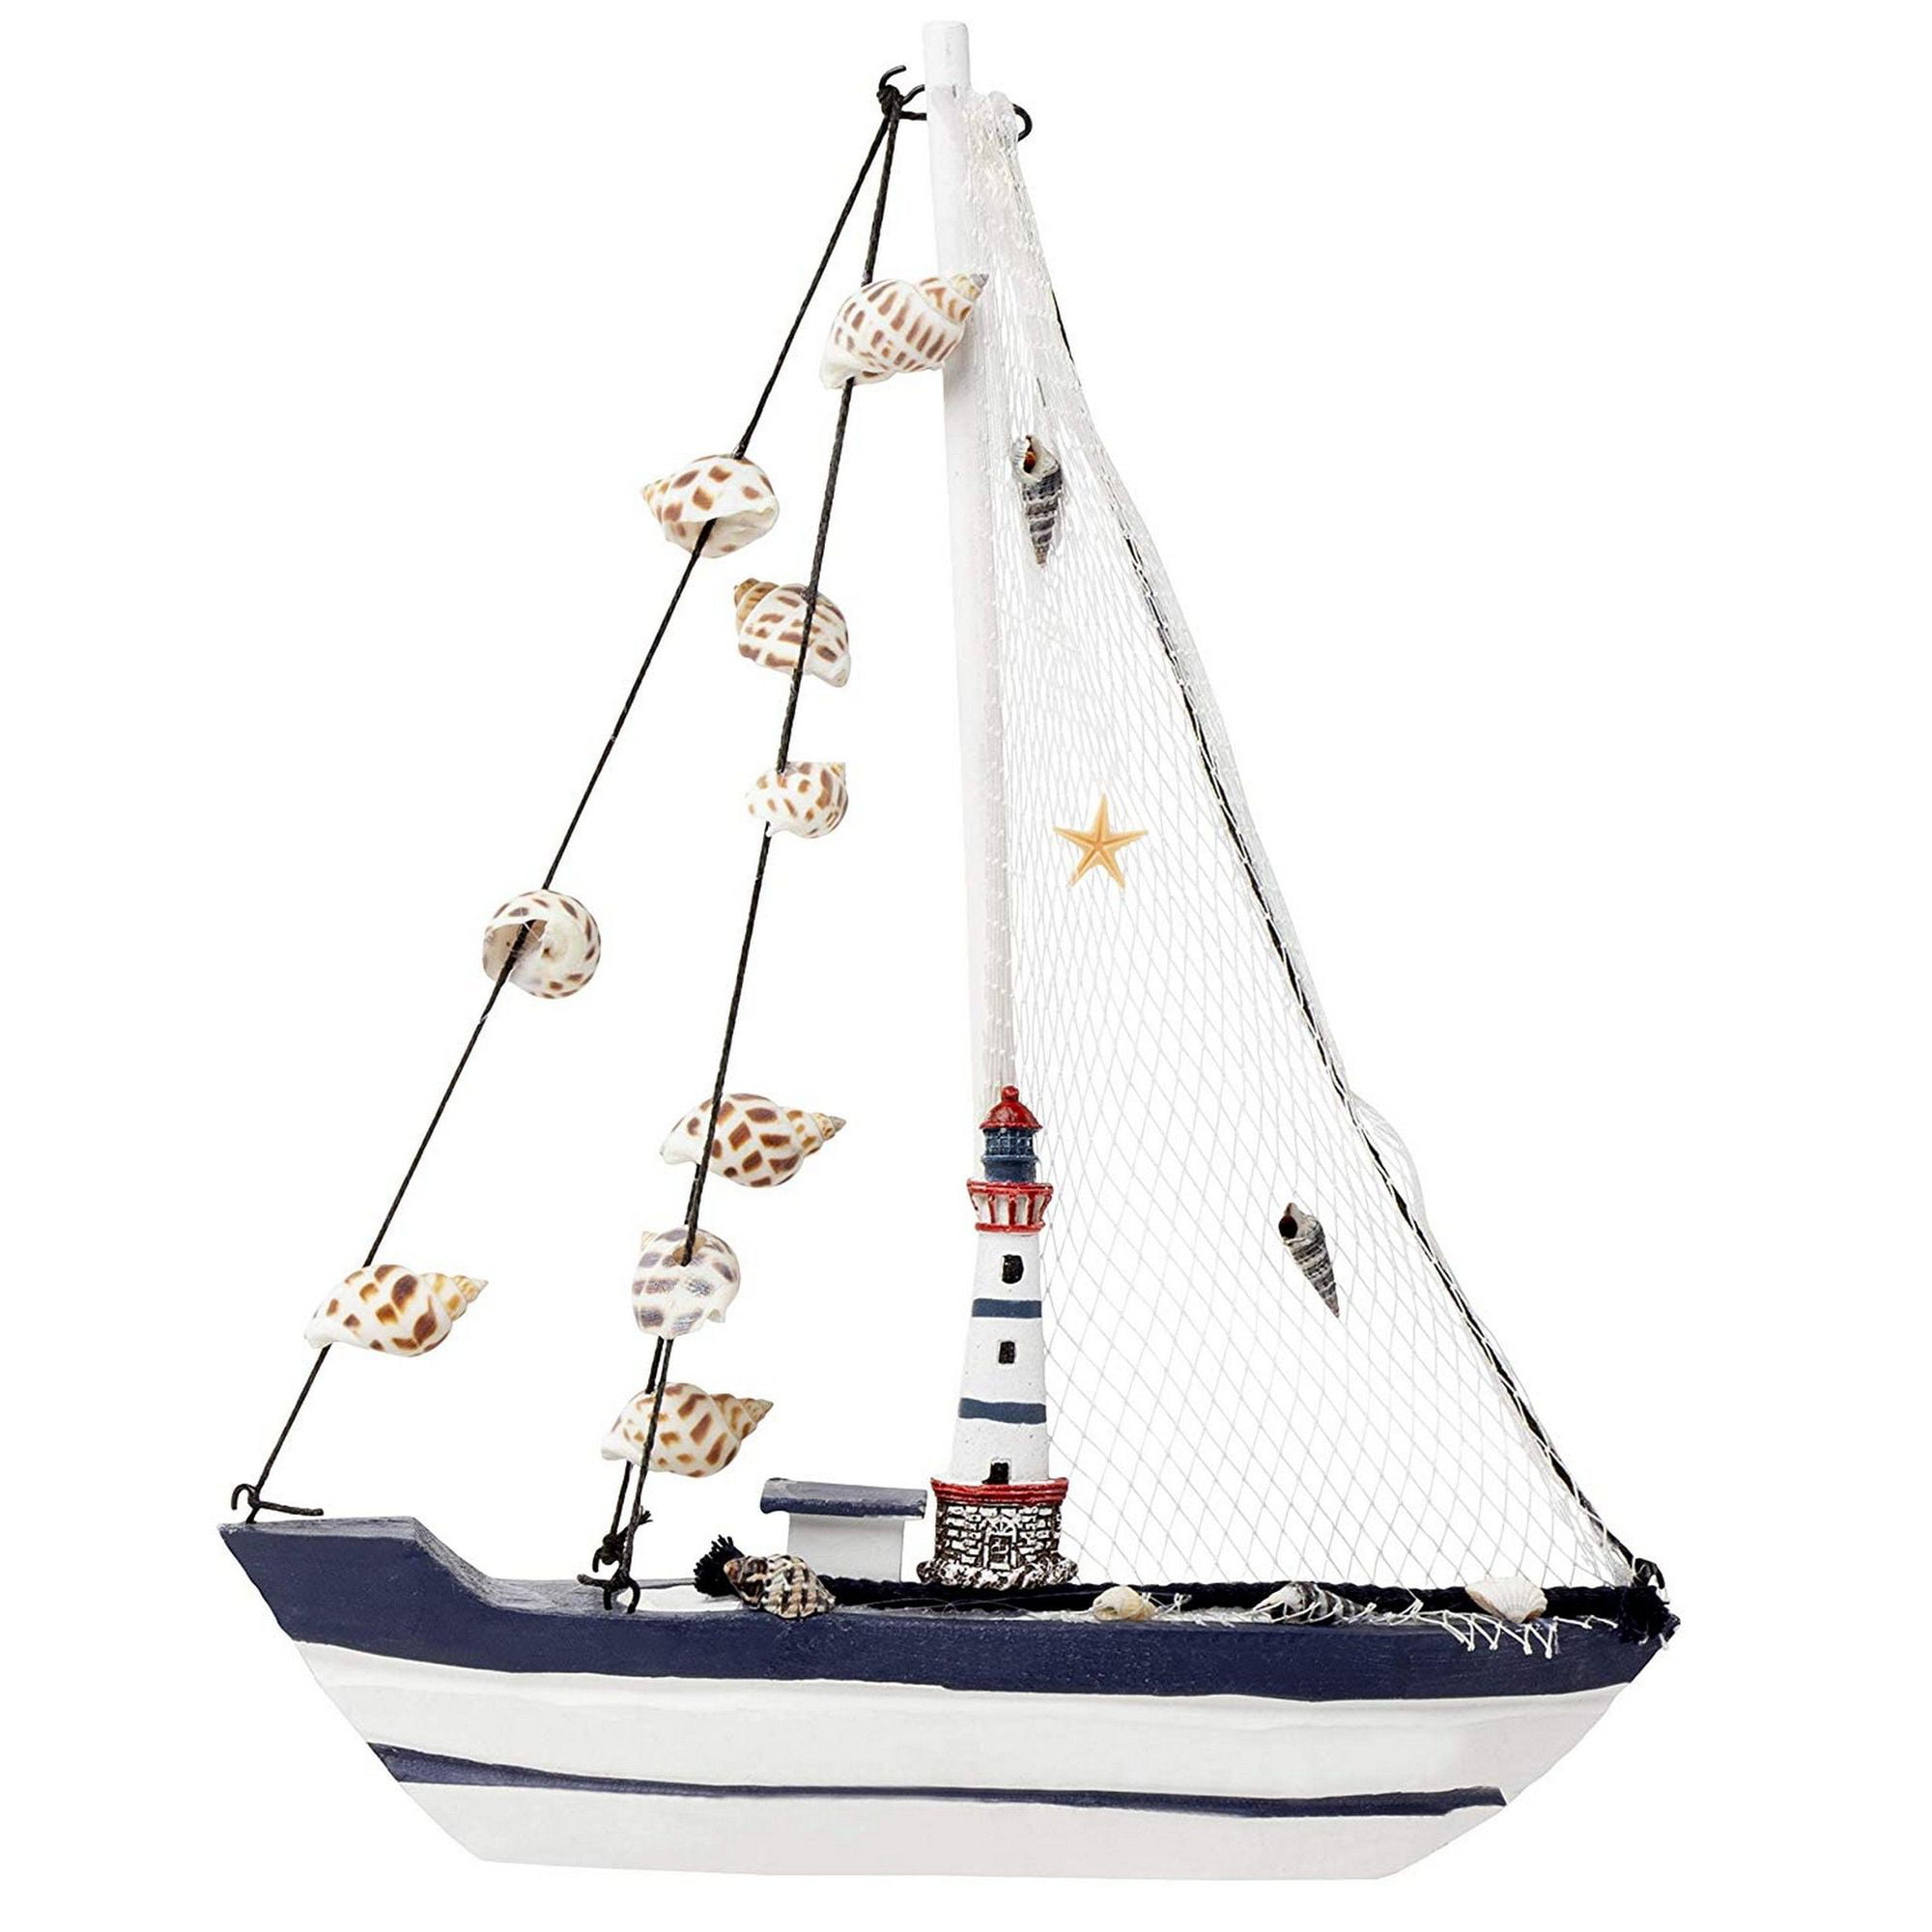 model sailboats home decor